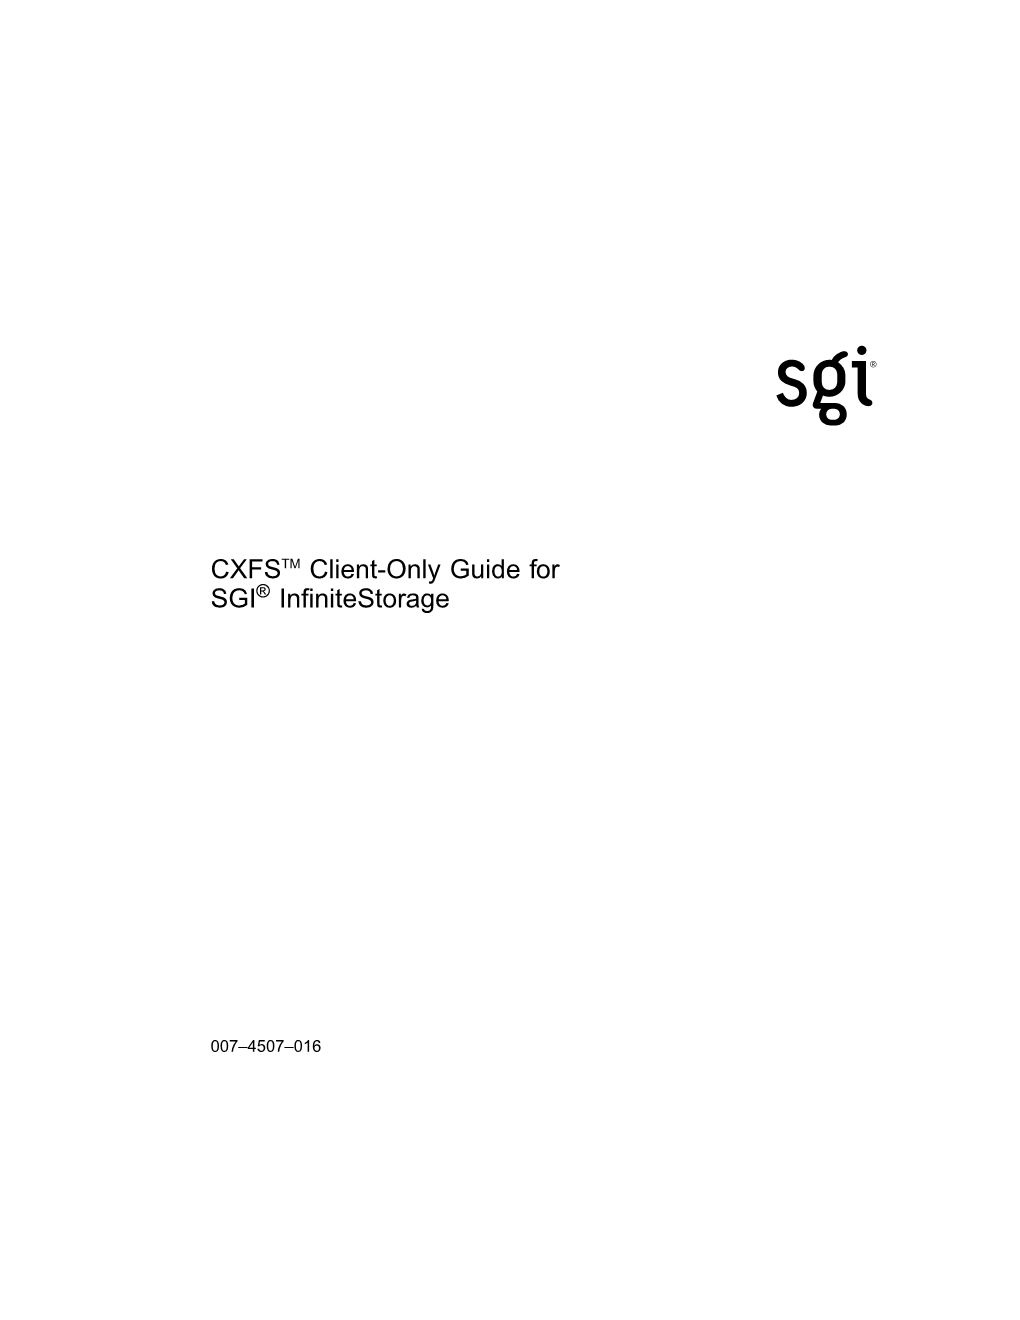 CXFSTM Client-Only Guide for SGI® Infinitestorage